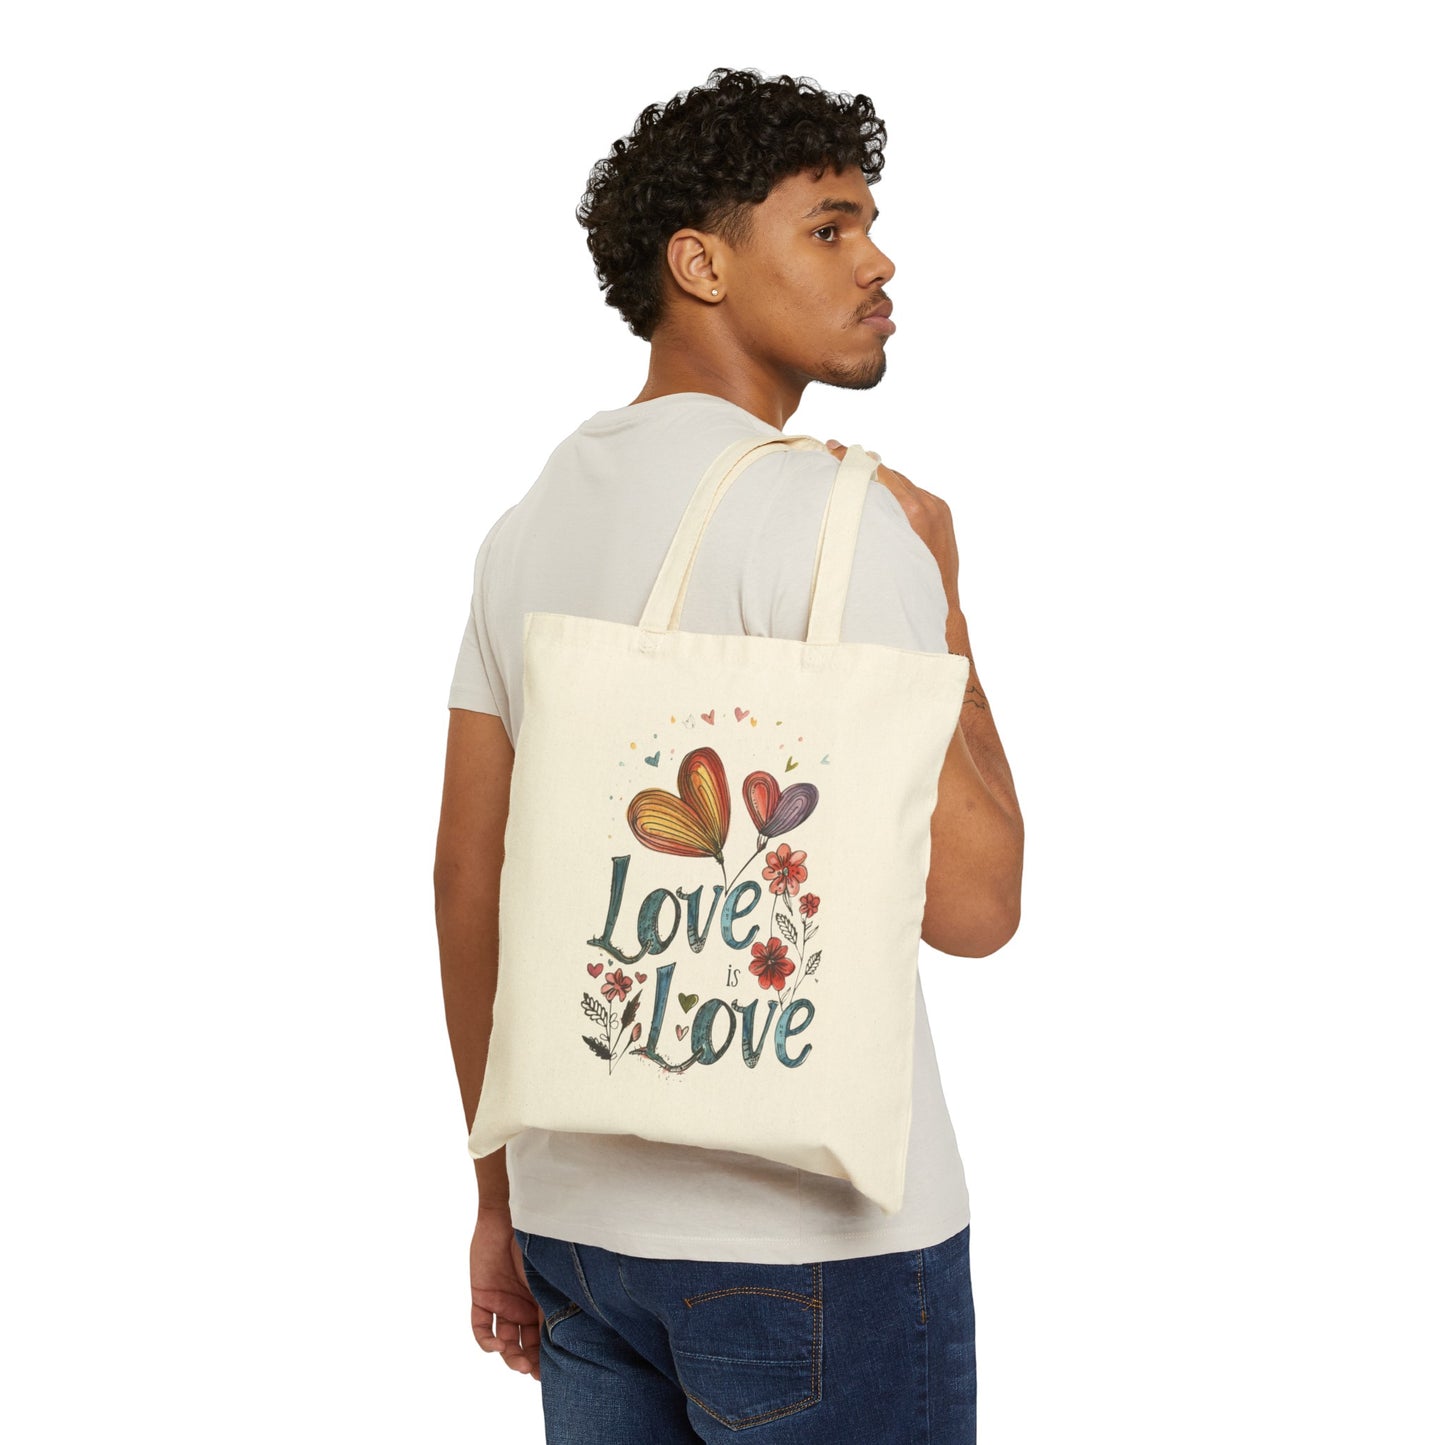 Love is Love Bag Pride Canvas Tote Bag Political bag Vote Equality LGBTQ tote Defend Equality Leftist Liberal bag Laptop Kindle Goodie tote